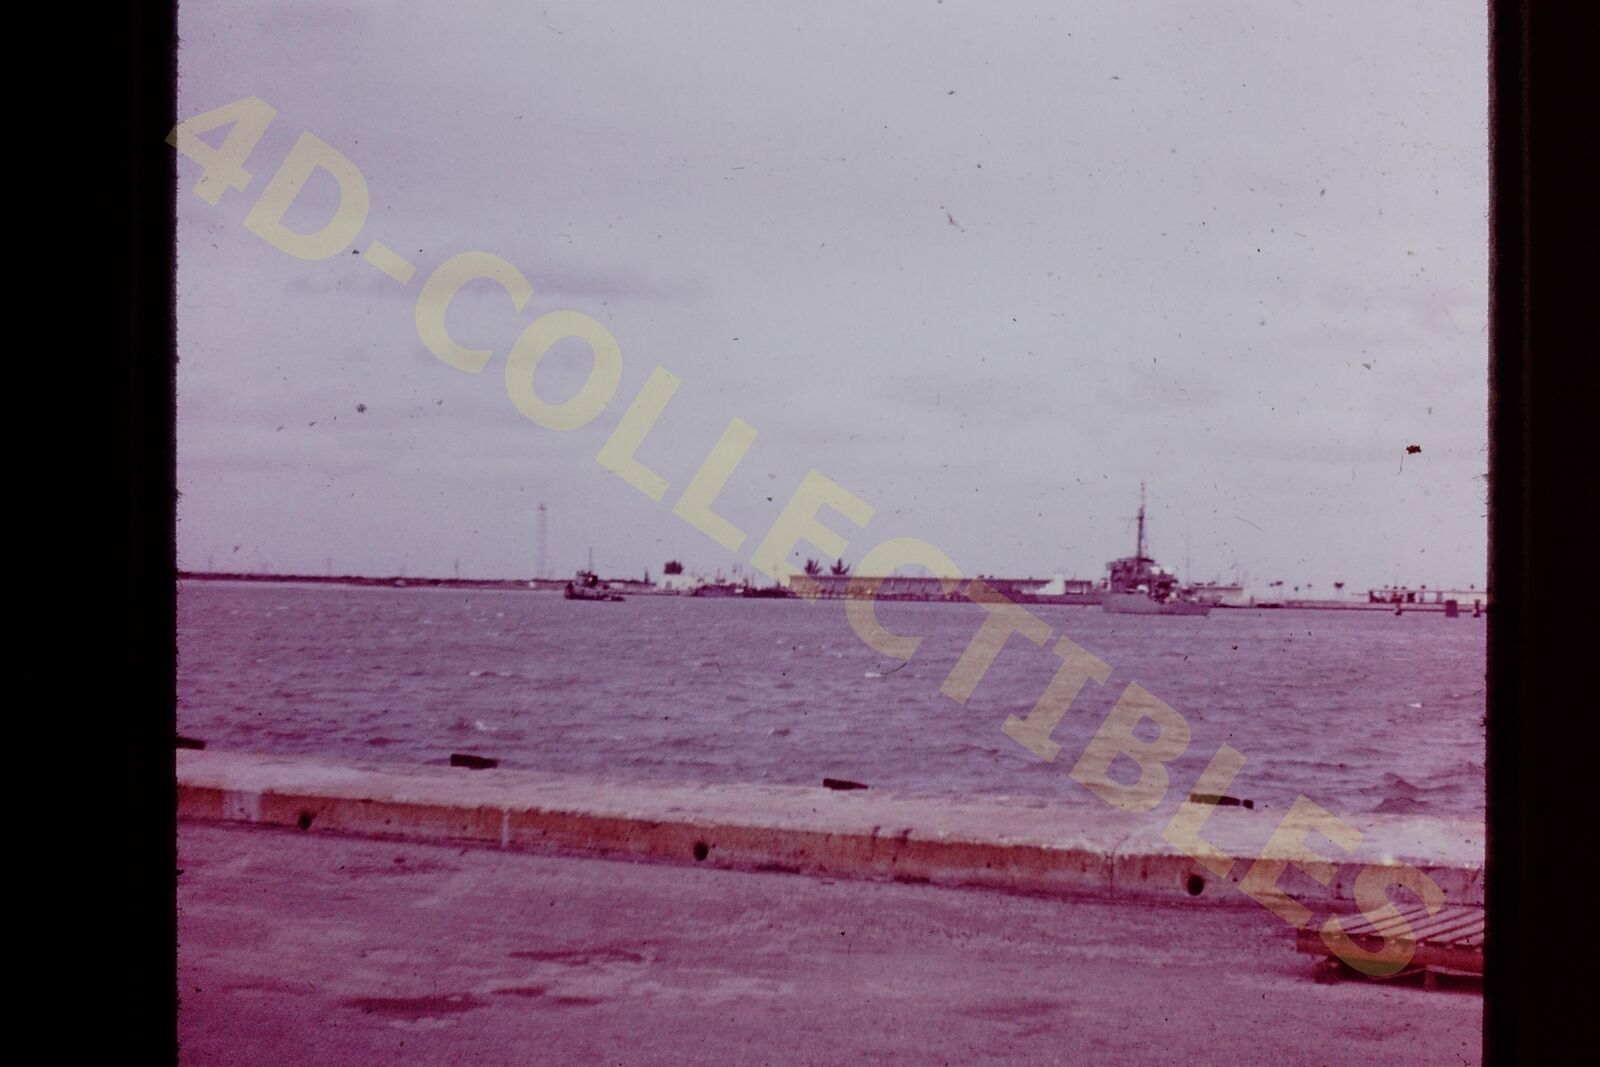 Original slide photo 1971 Florida Port USS Alacrity (MSO-520) Minesweeper - 9